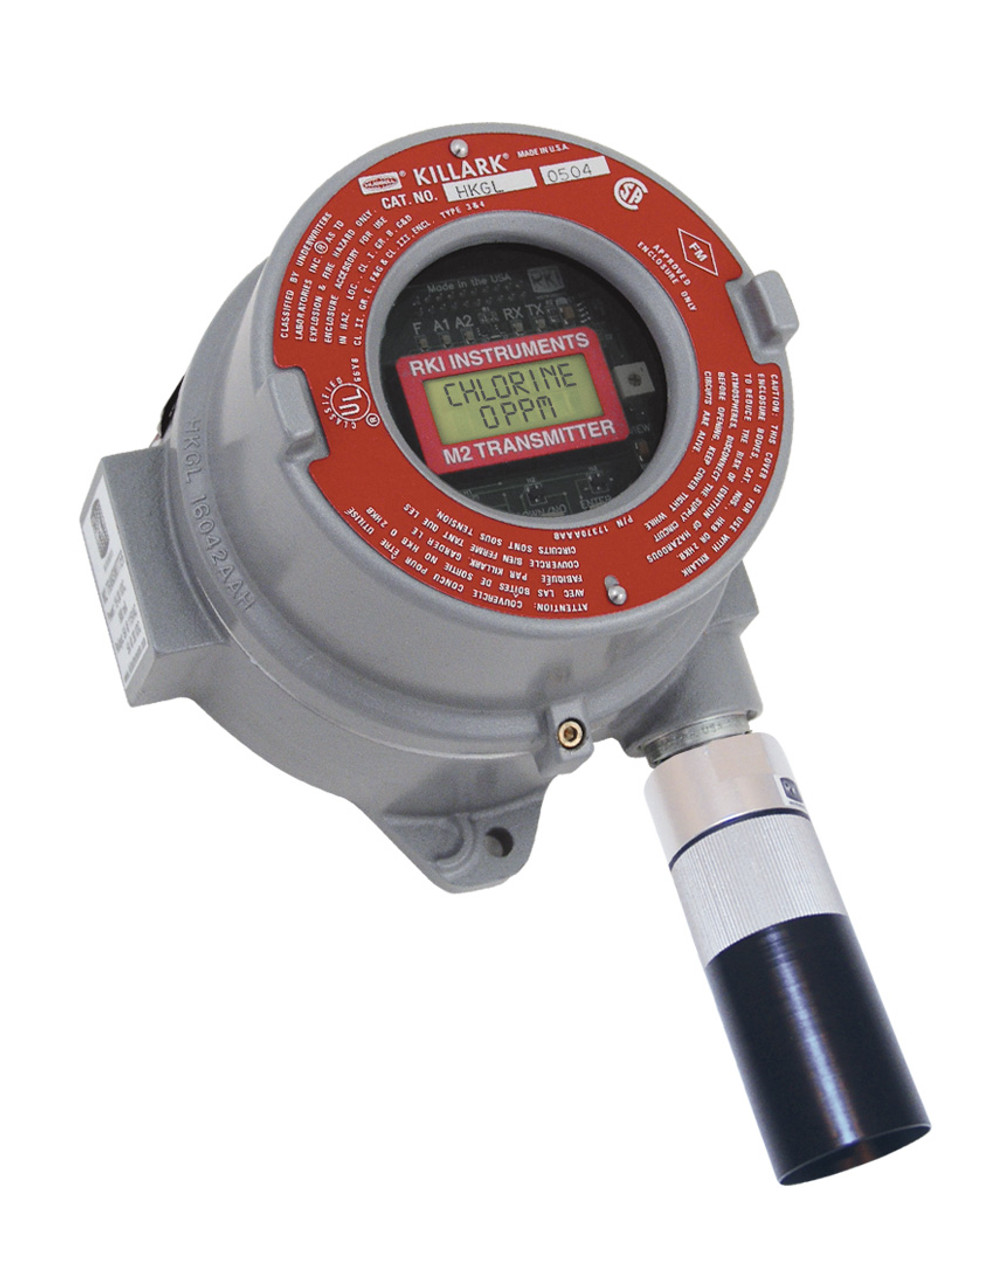 Macurco CO2 Fixed Gas Detector (0-5% vol, 3 alarm levels)